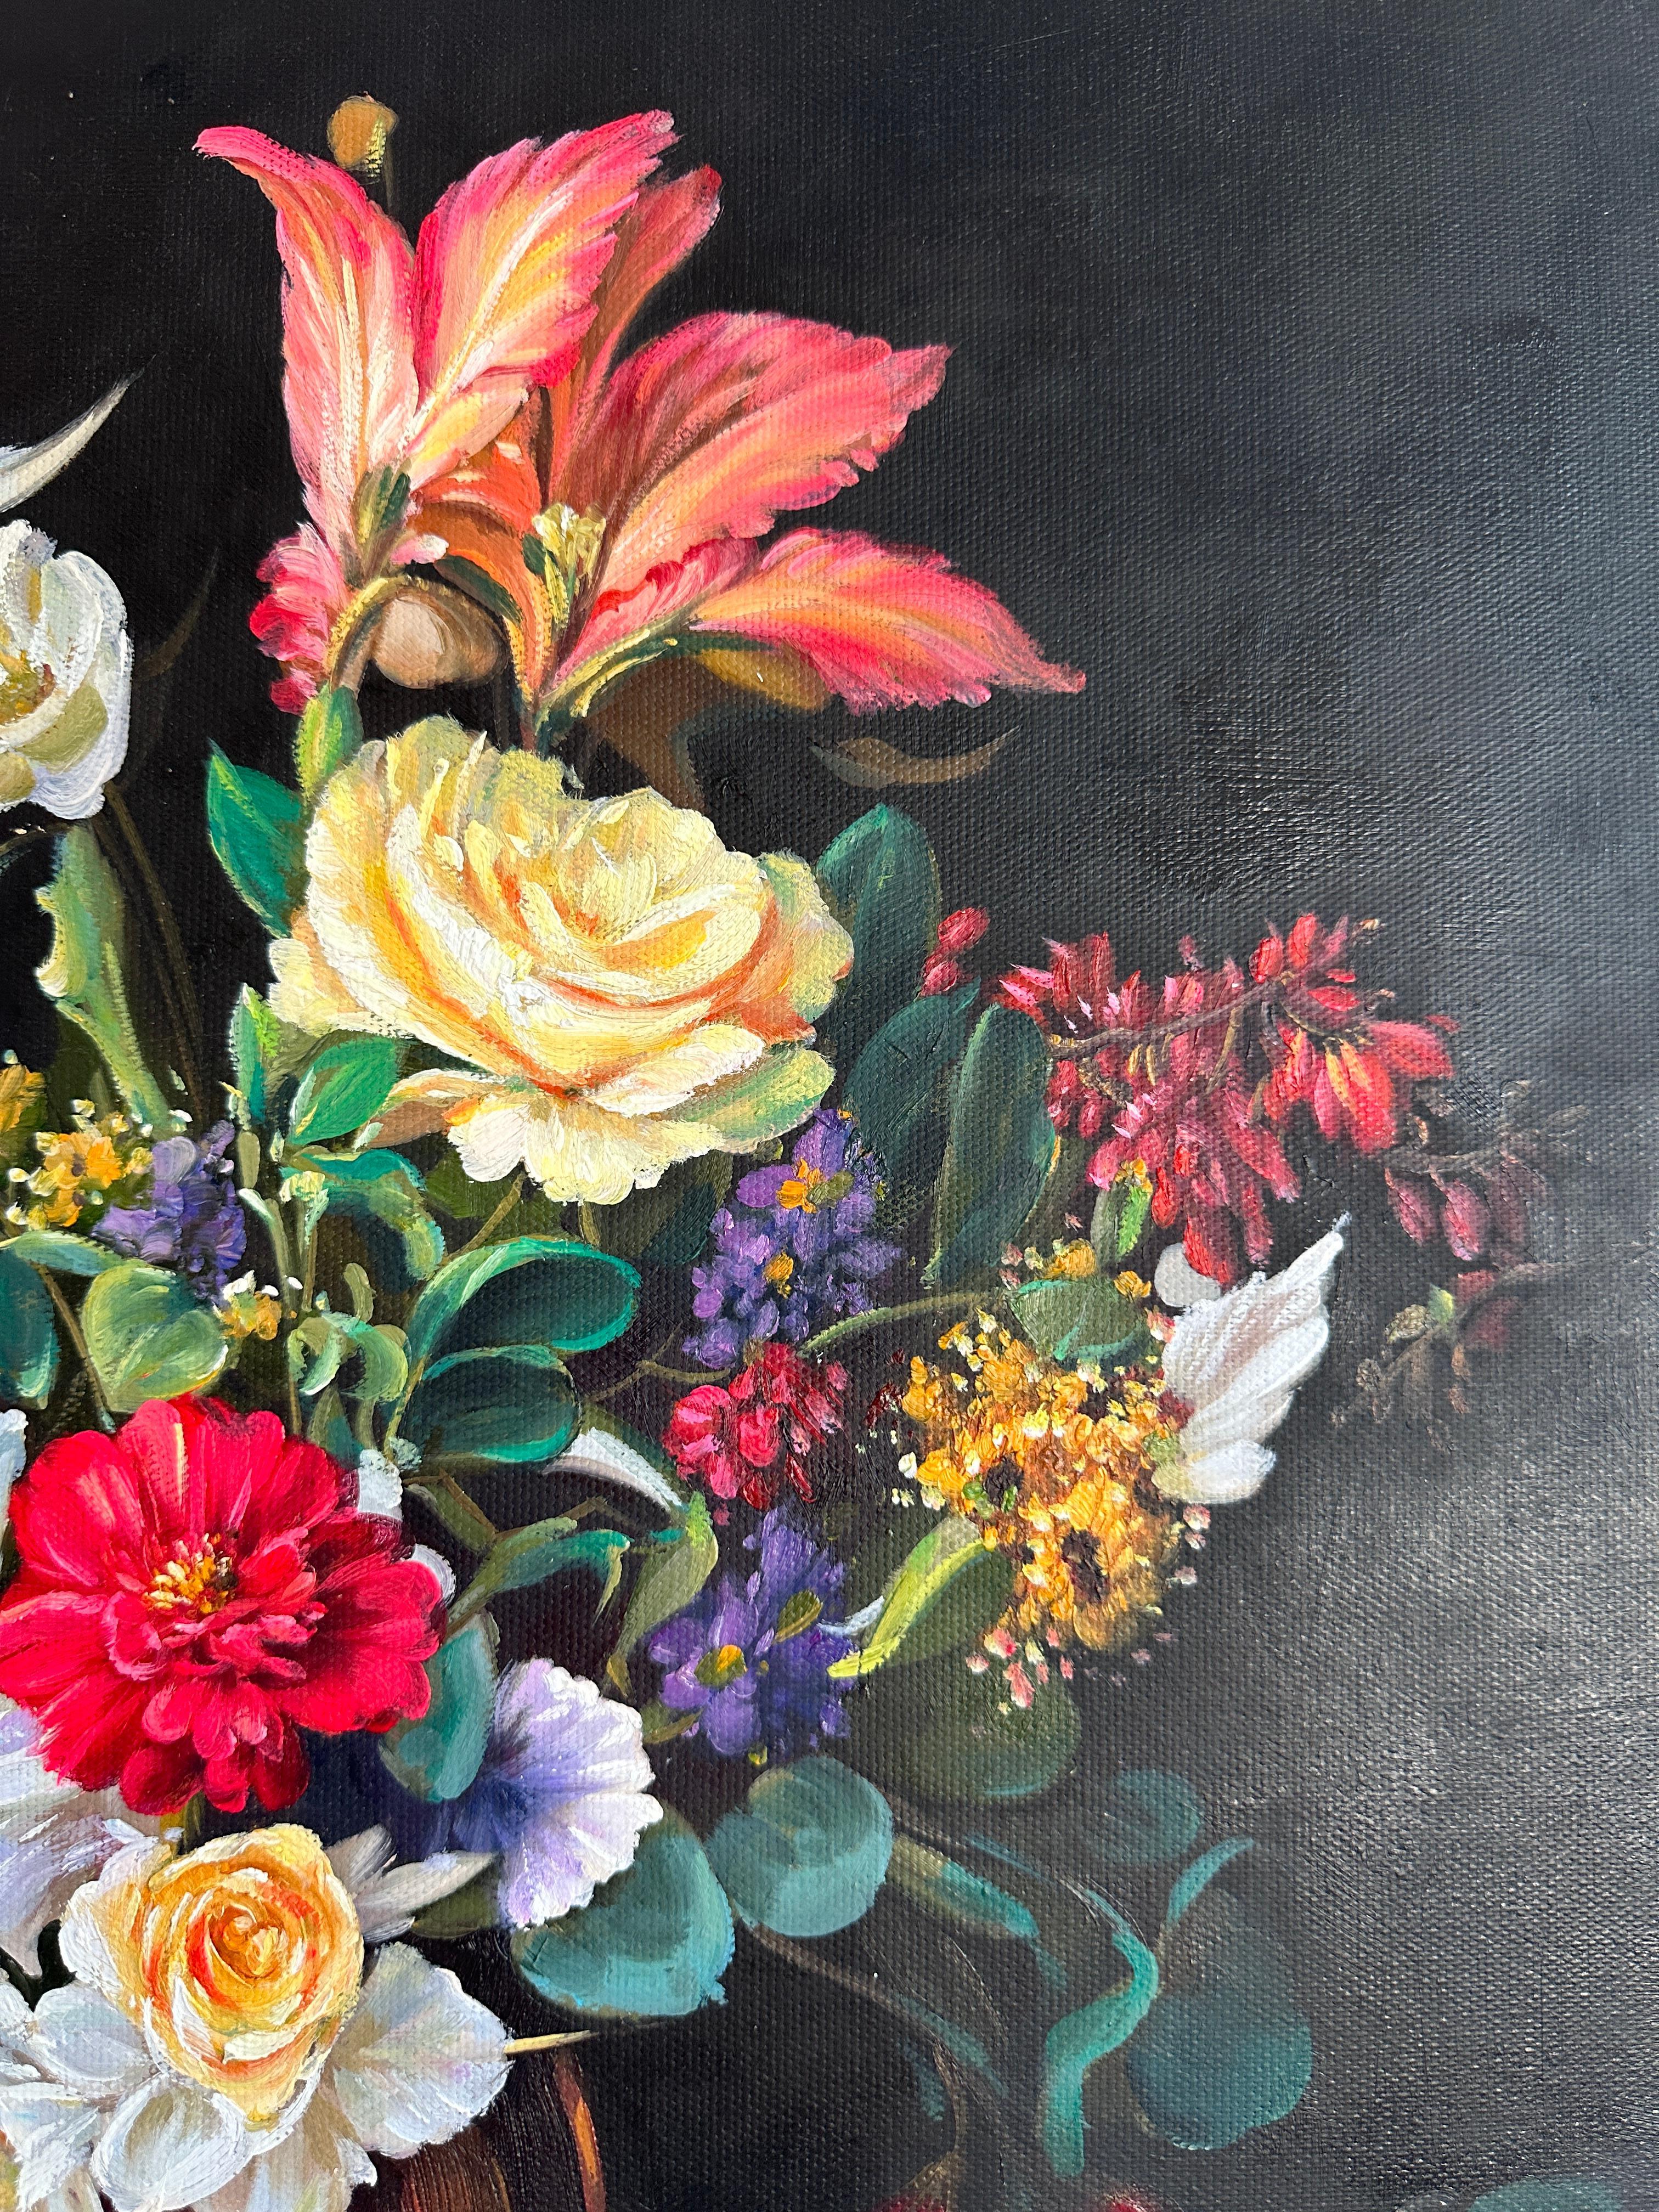 Heart over Head - Katharina Husslein Contemporary Flower Still life Oil Painting 5